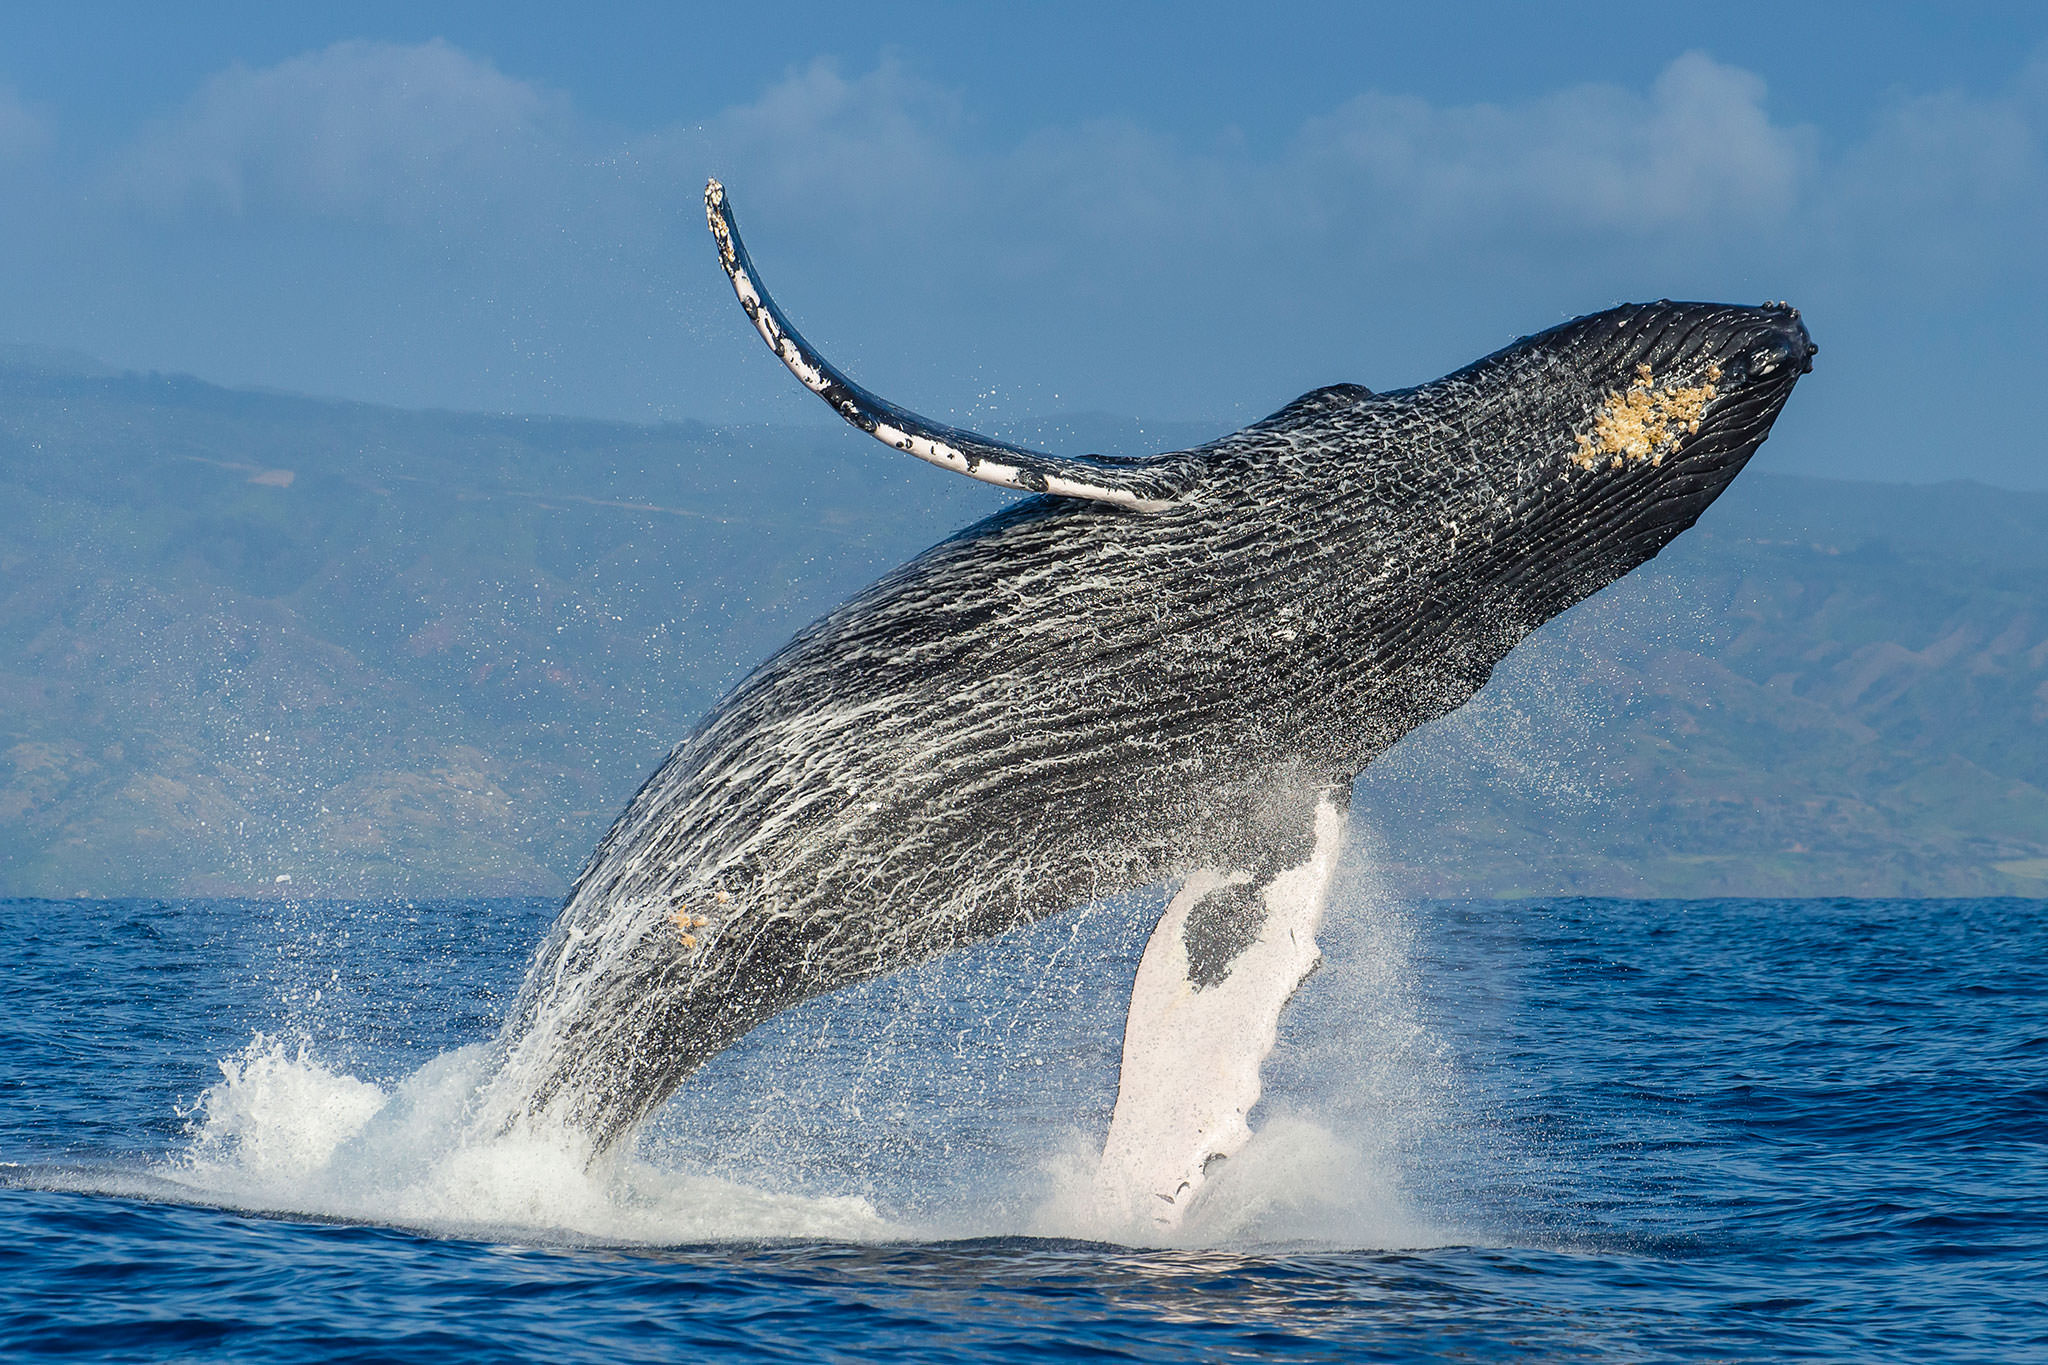 anonim stellar balinalari harekete gecti buyuk miktarda xlmyi coinbasee tasidi